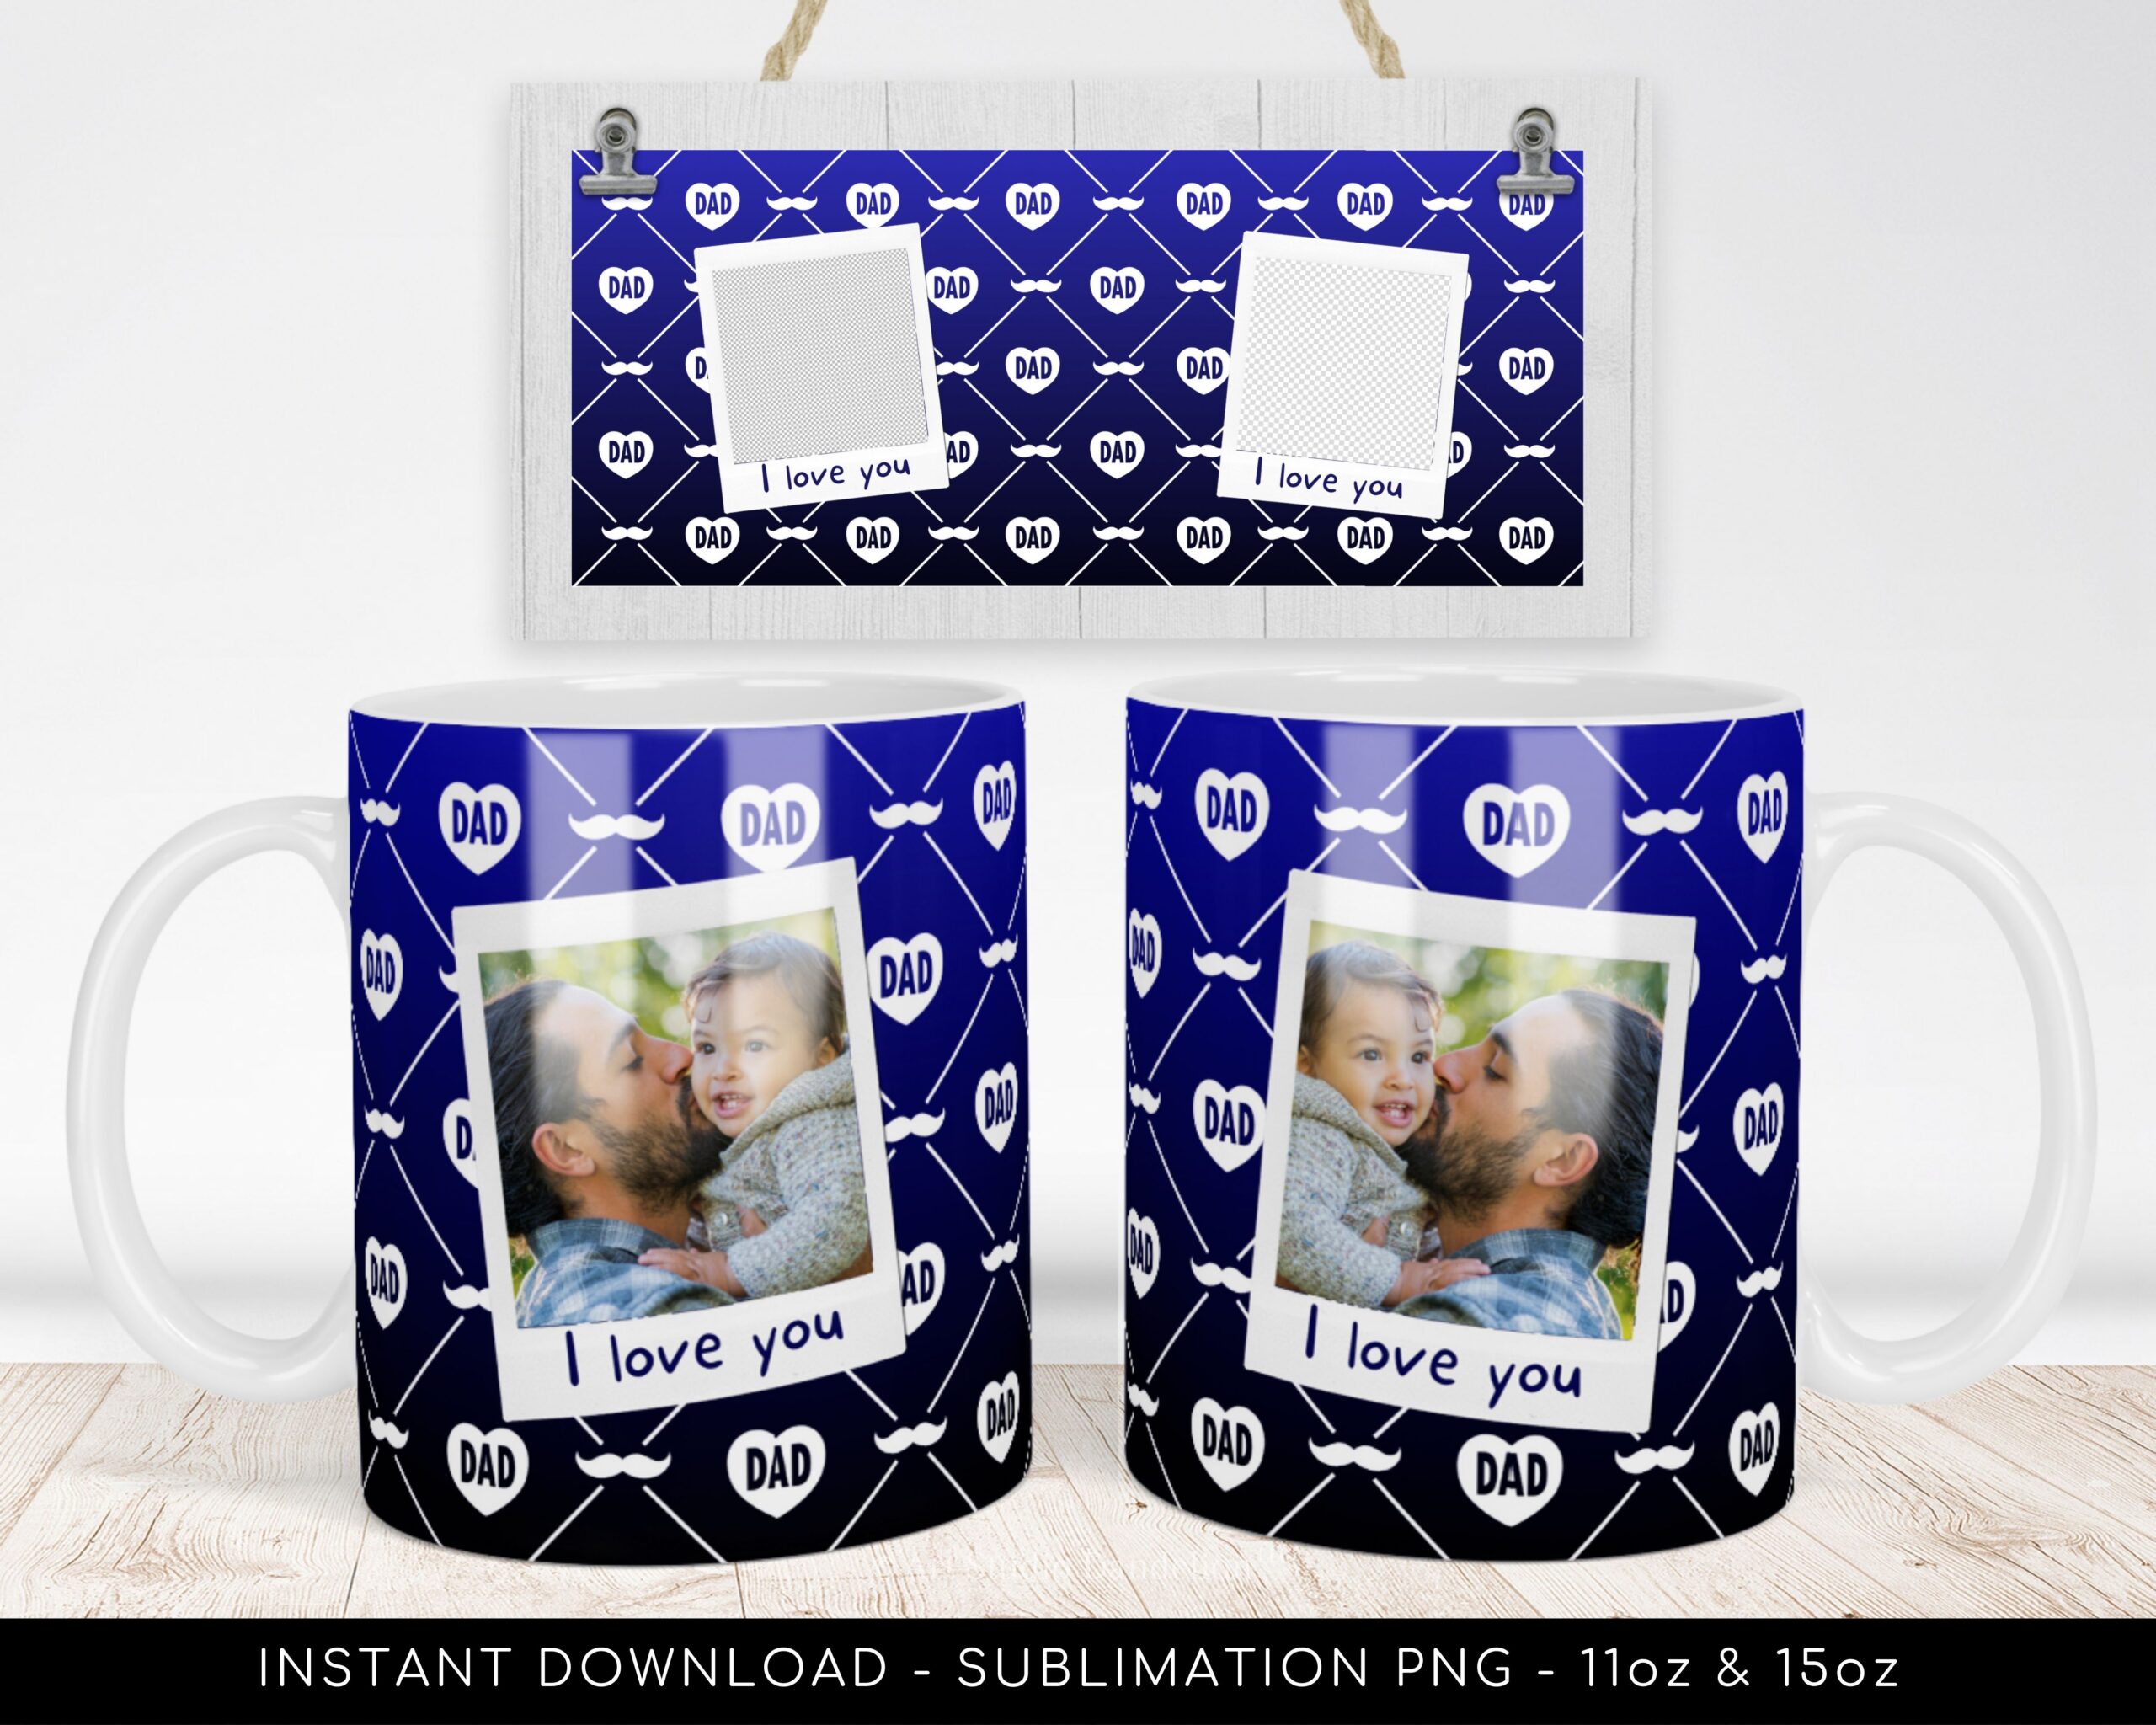 DAD Custom Photo Mug PNG File for Sublimation - "I Love You" Photo Mug Template. DIY Mug gift for Father's Day - 300dpi - Instant Download